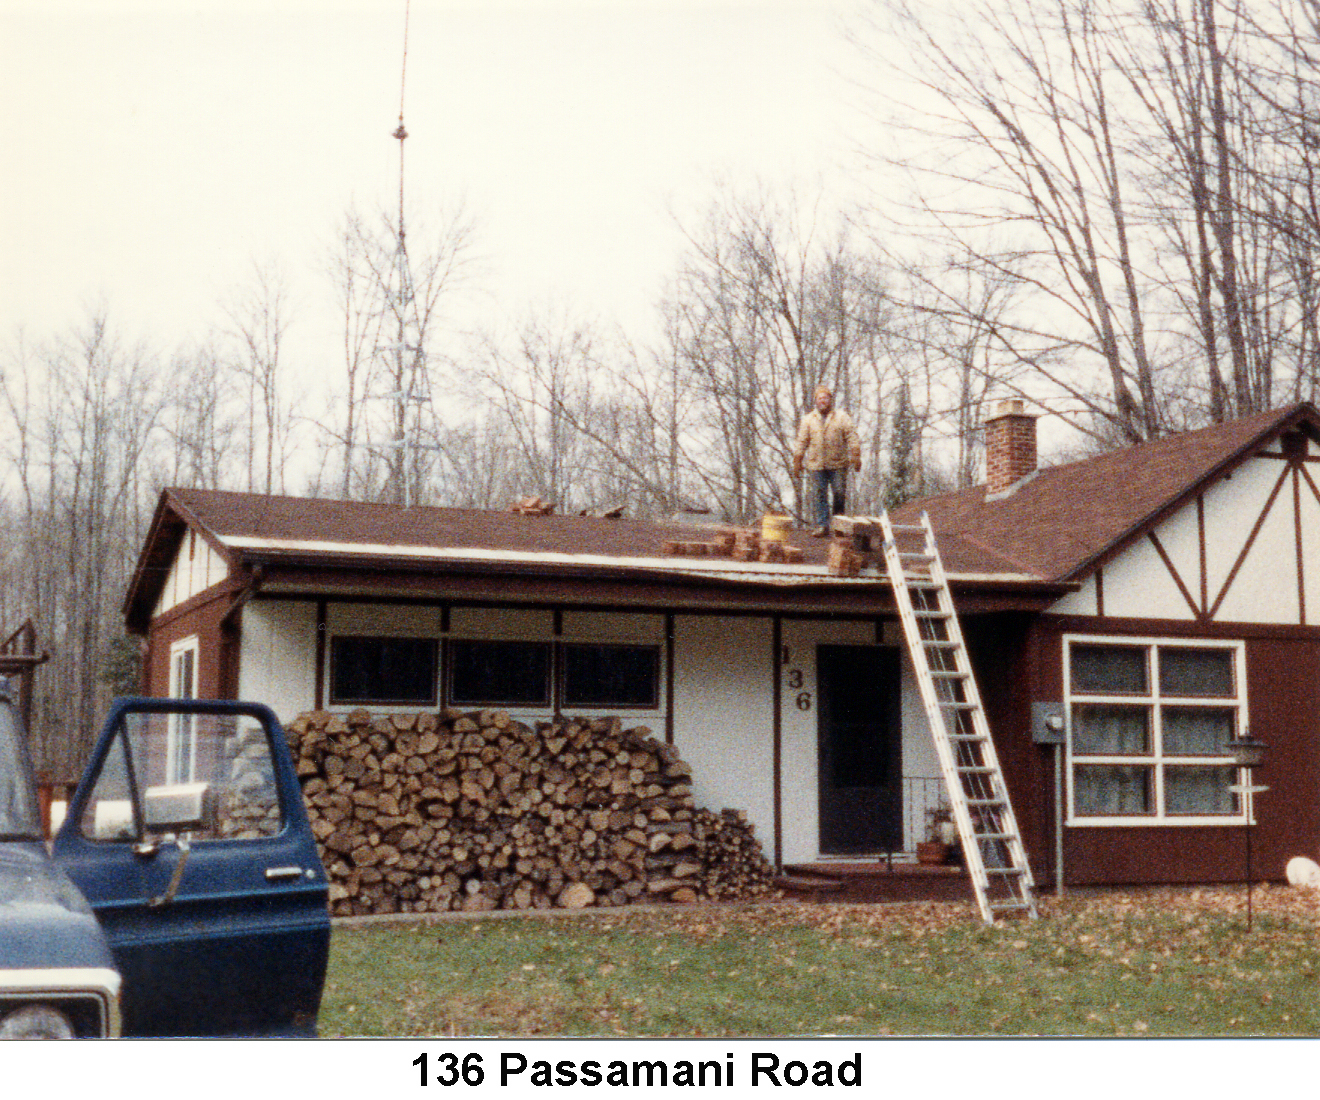 repairing the fireplace chimney at 136 Passamani Road